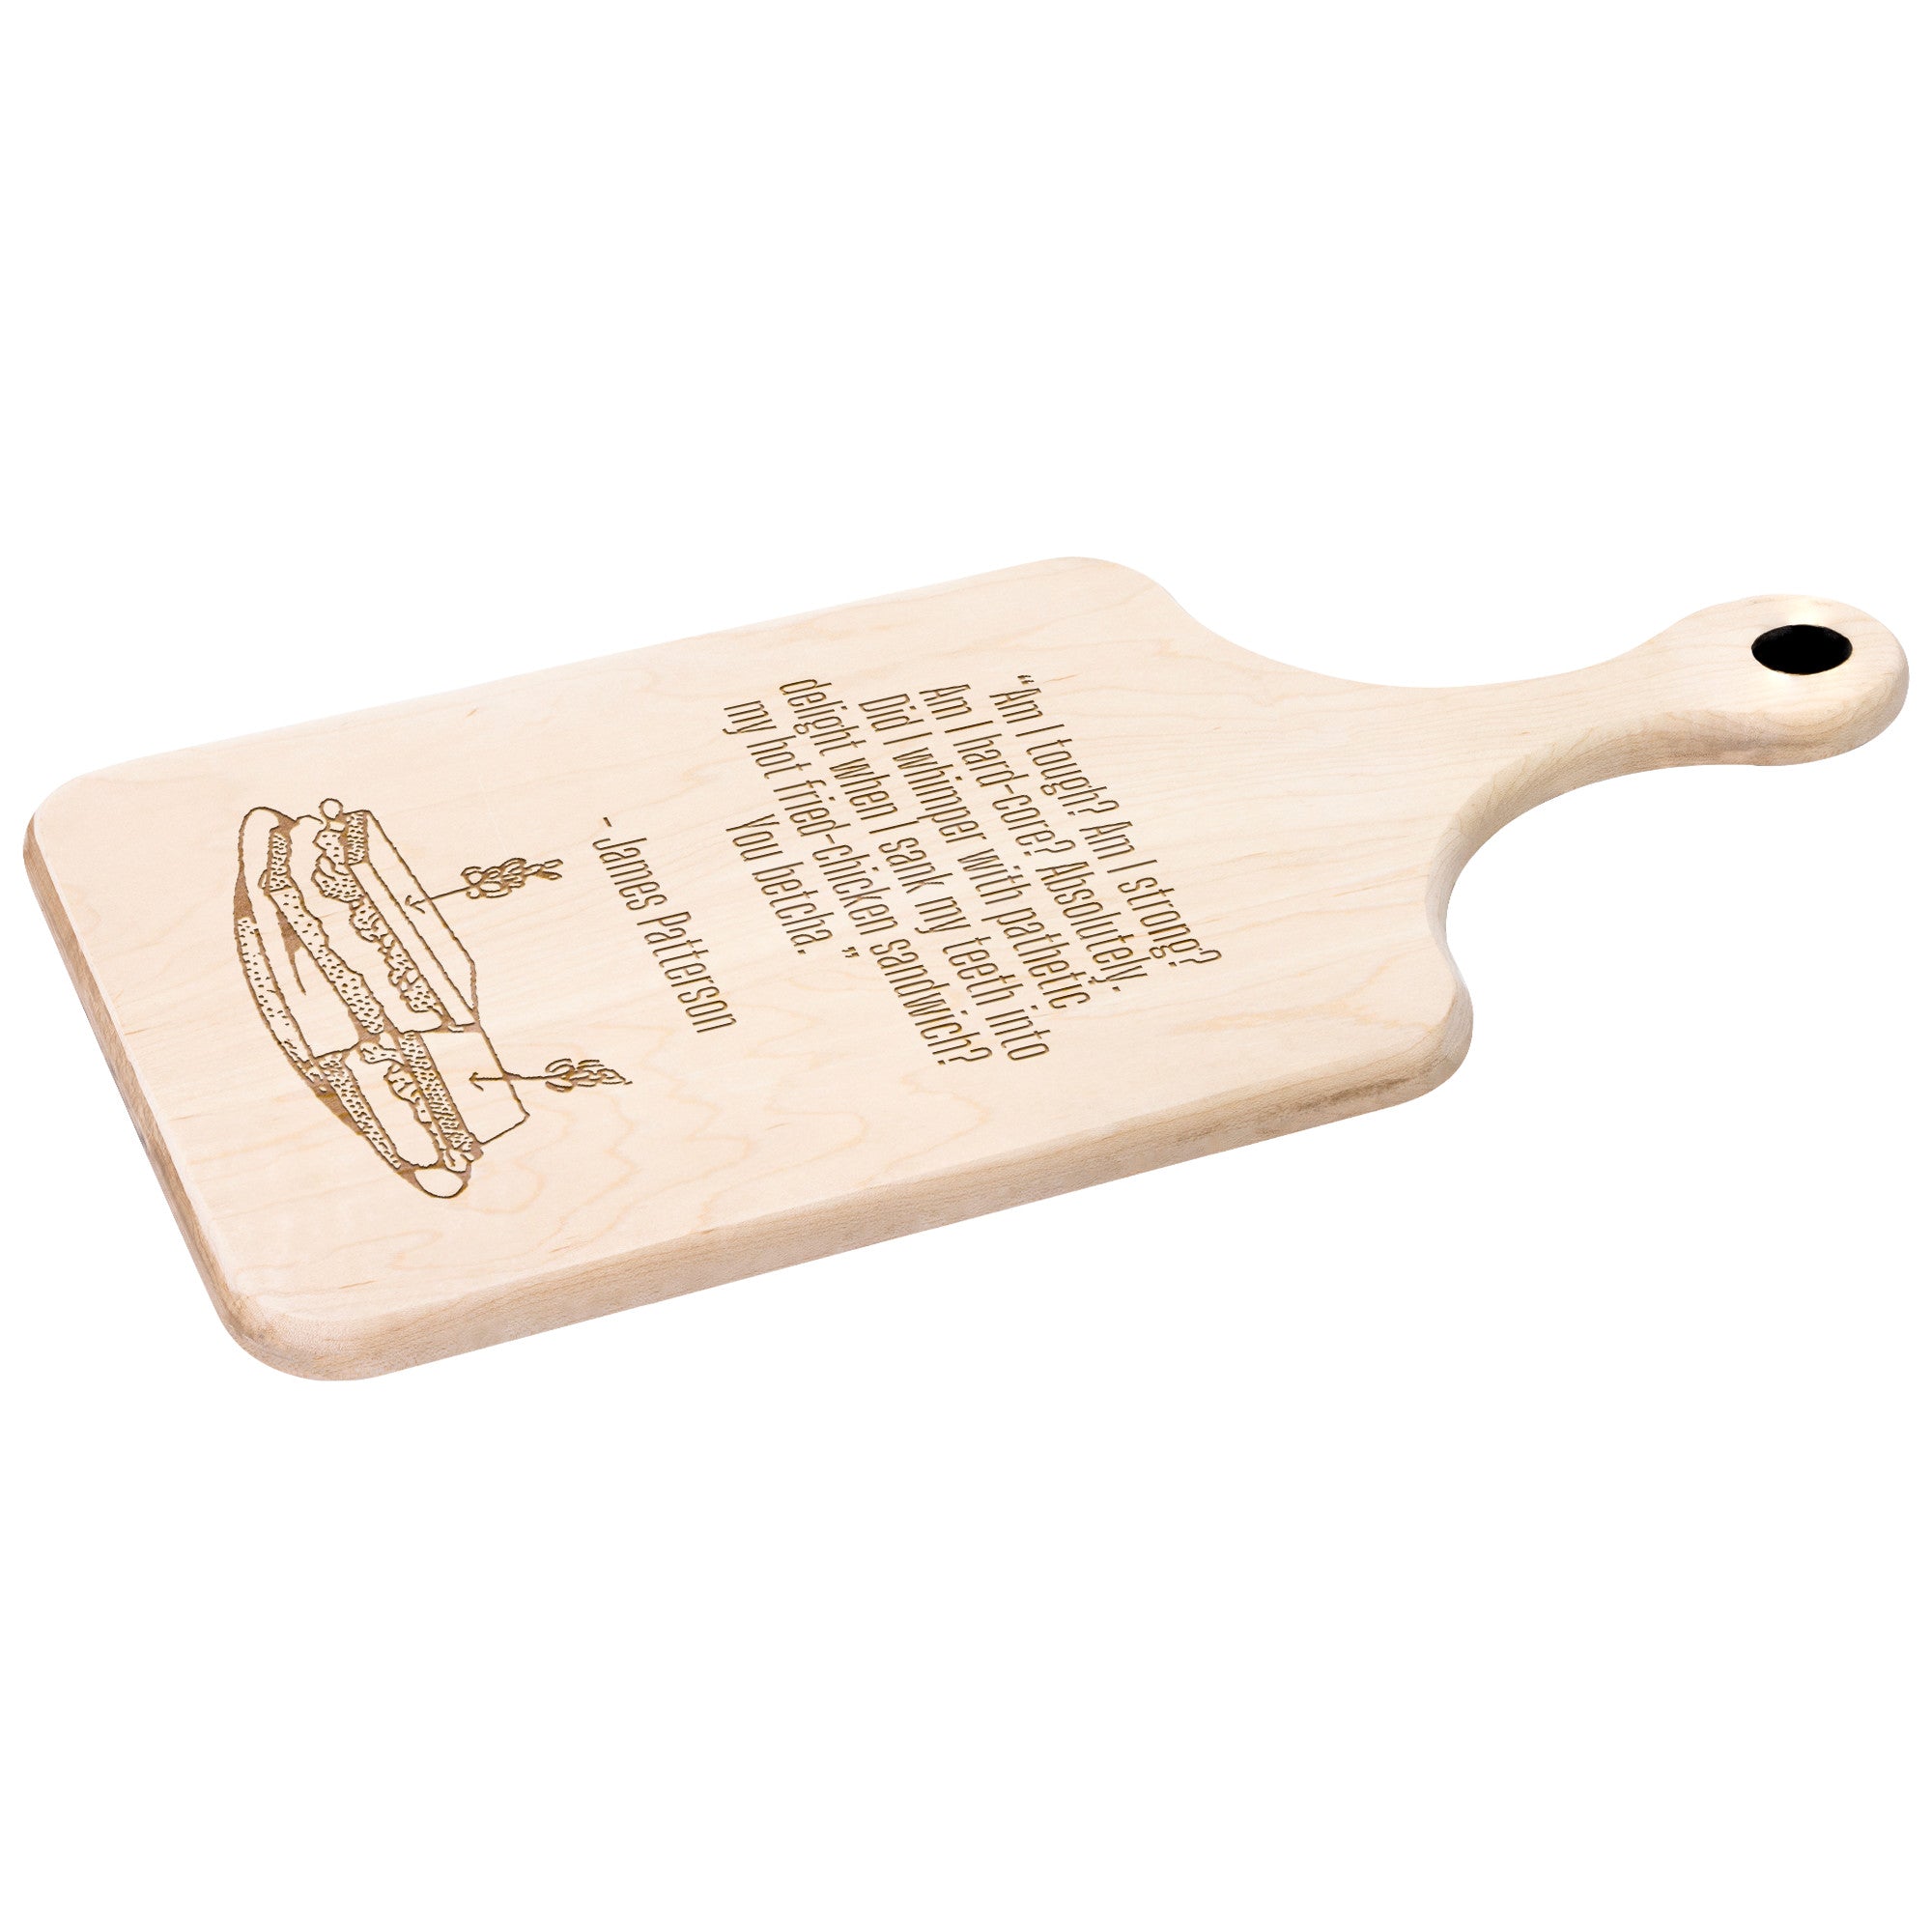 Hardwood Paddle Cutting Board - Variant 13